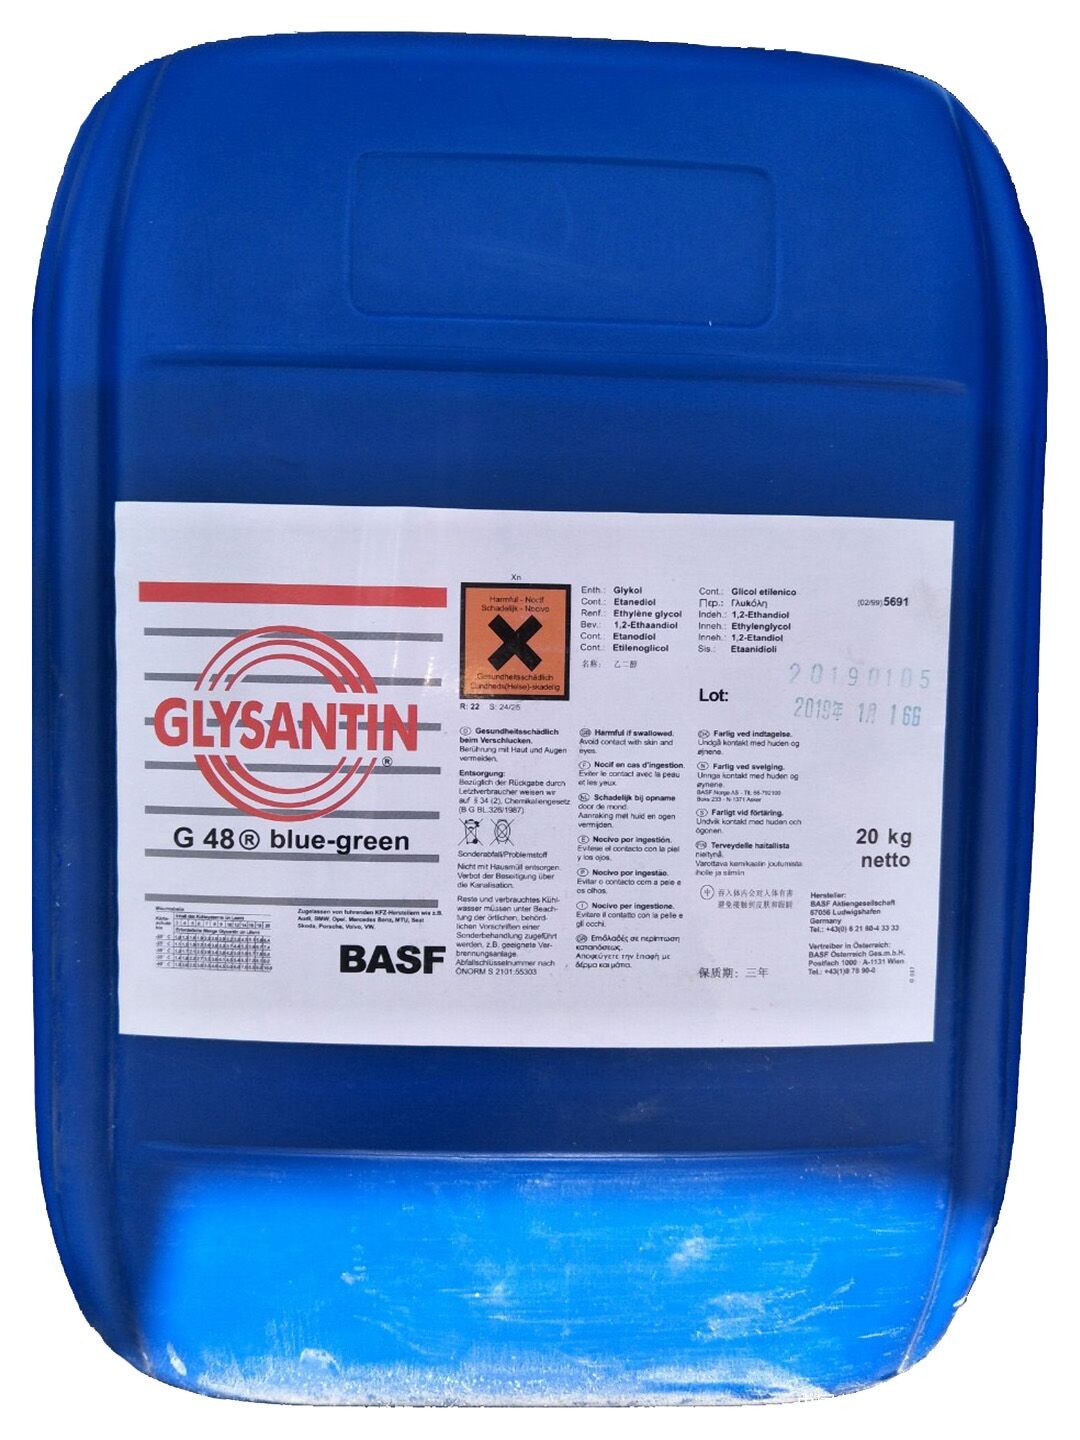 GLYSANTIN G48 blue-green